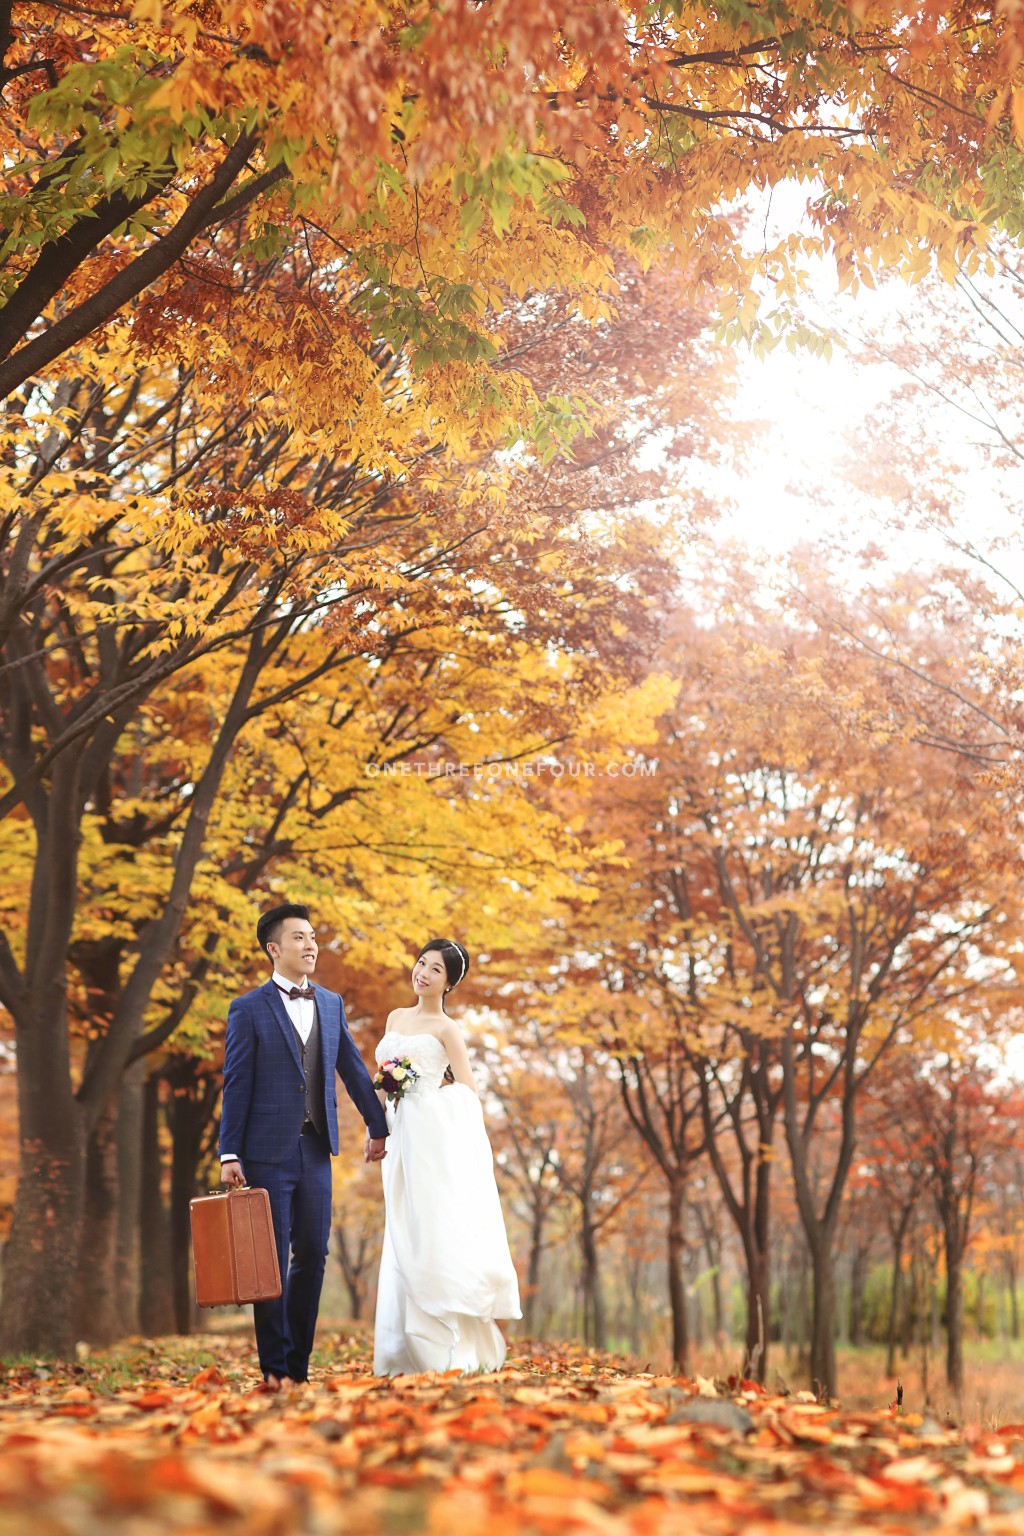 Studio Bong Korea Autumn Outdoor Pre-Wedding Photography - Past Clients by Bong Studio on OneThreeOneFour 15